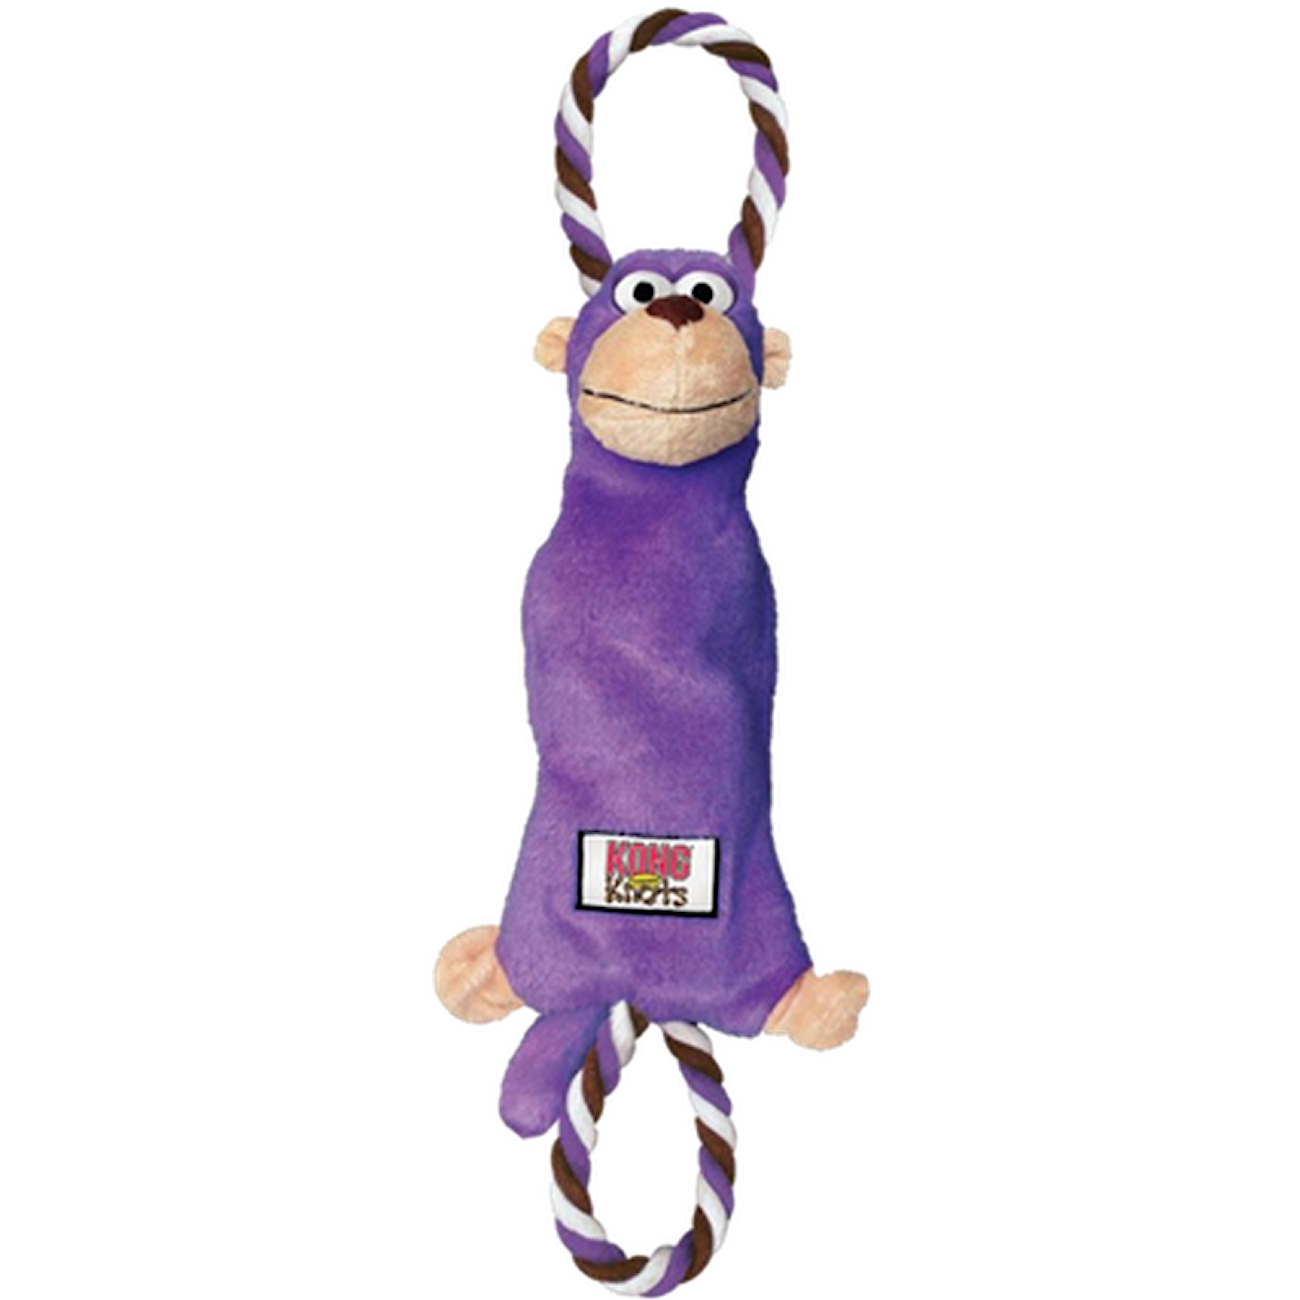 Tugger Knots Monkey Dog Toy Small/Medium 36cm